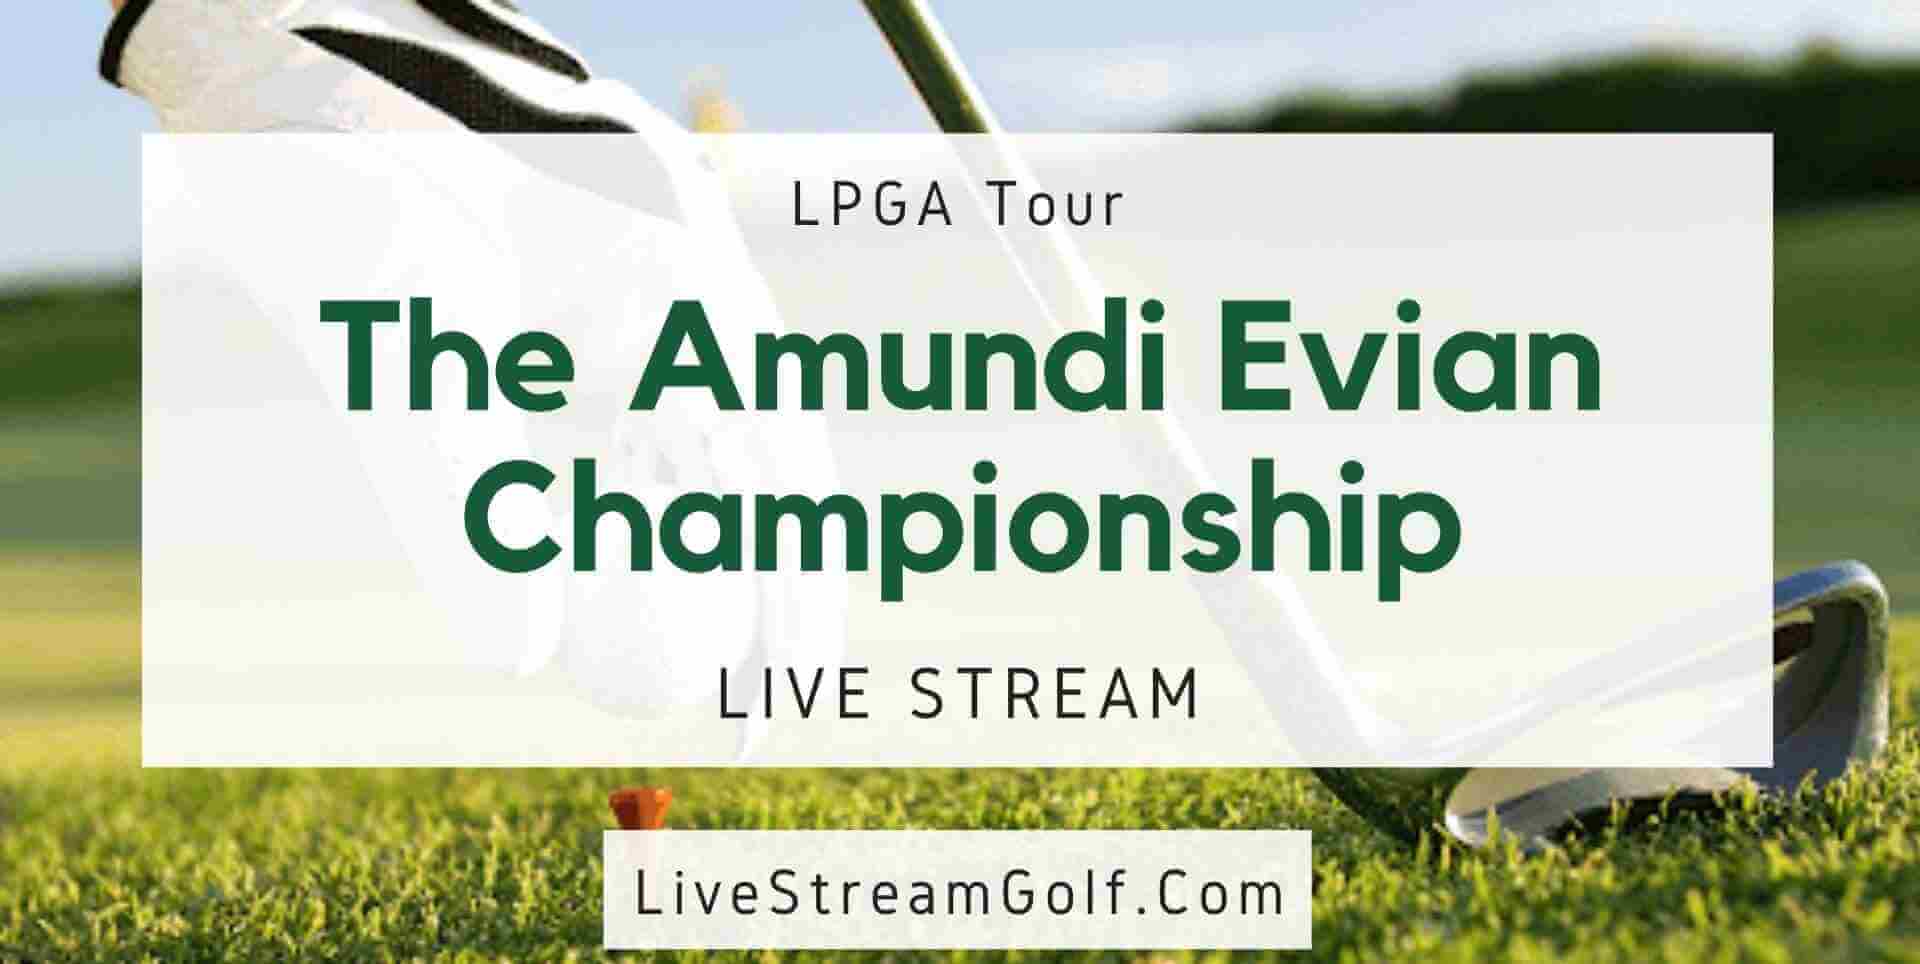 Evian Championship Live Stream LPGA Tour